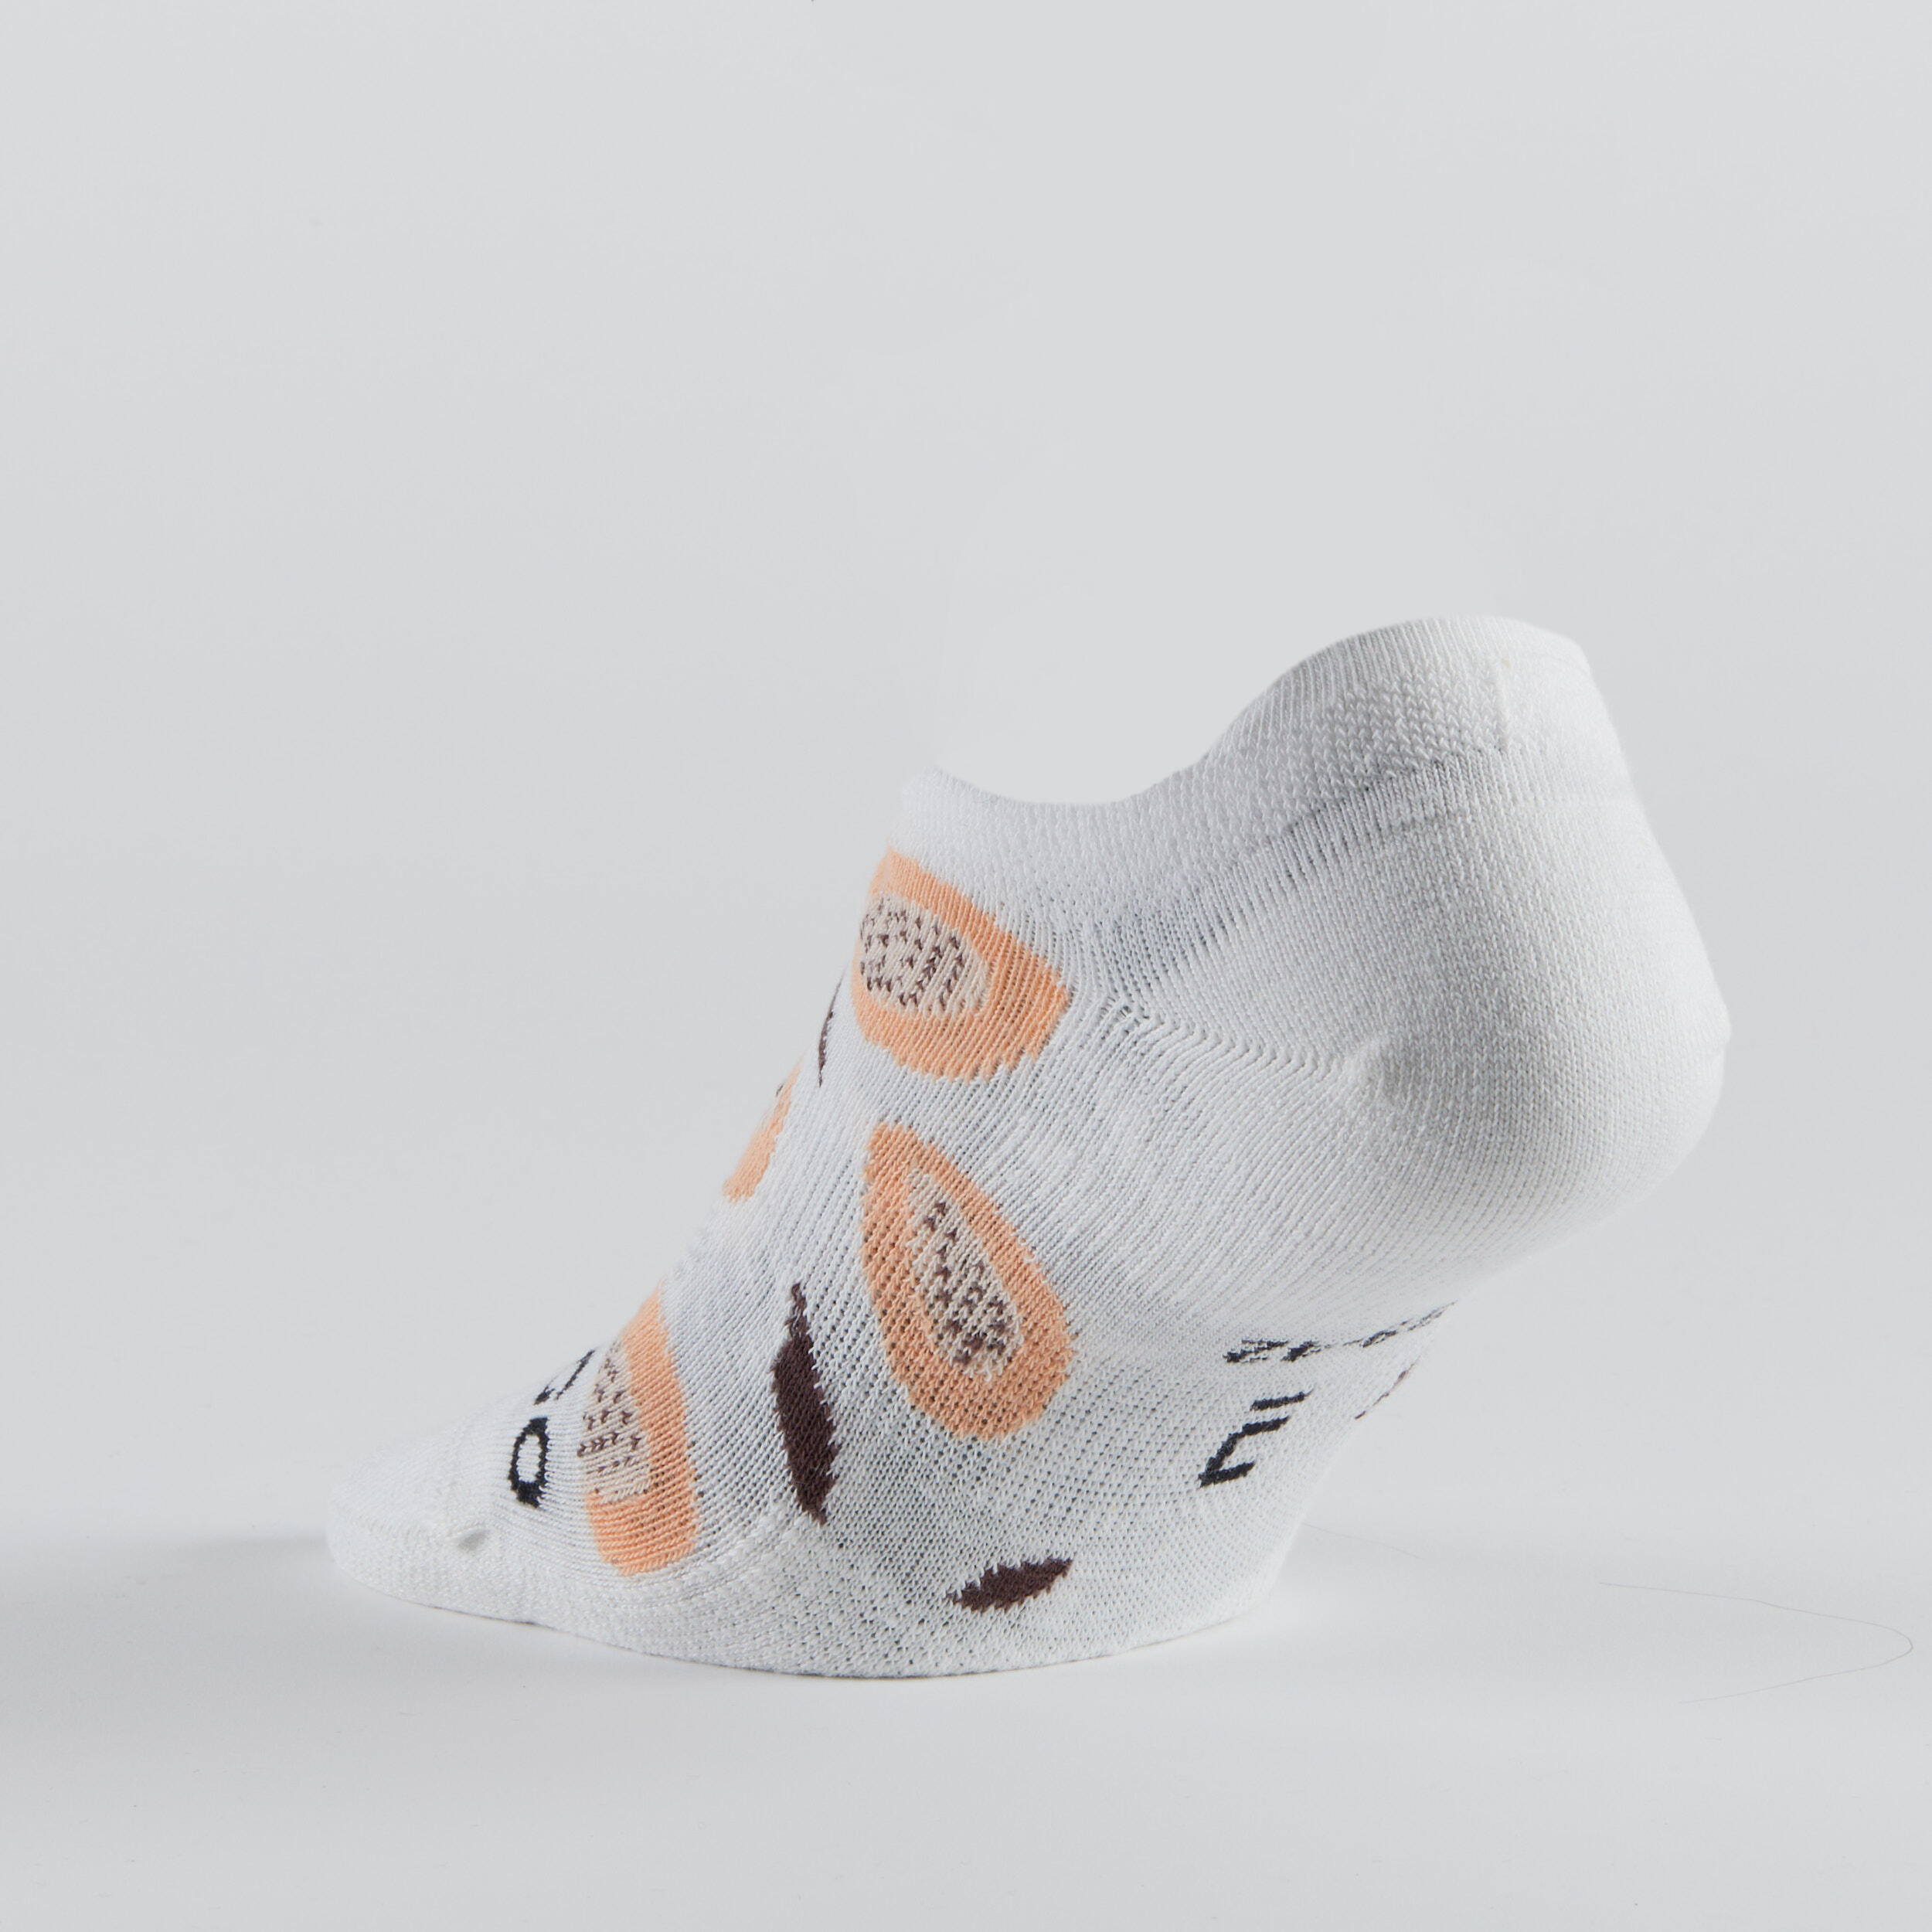 Low Sports Socks Tri-Pack RS 160 - Off-White/Oatmeal Print 8/14